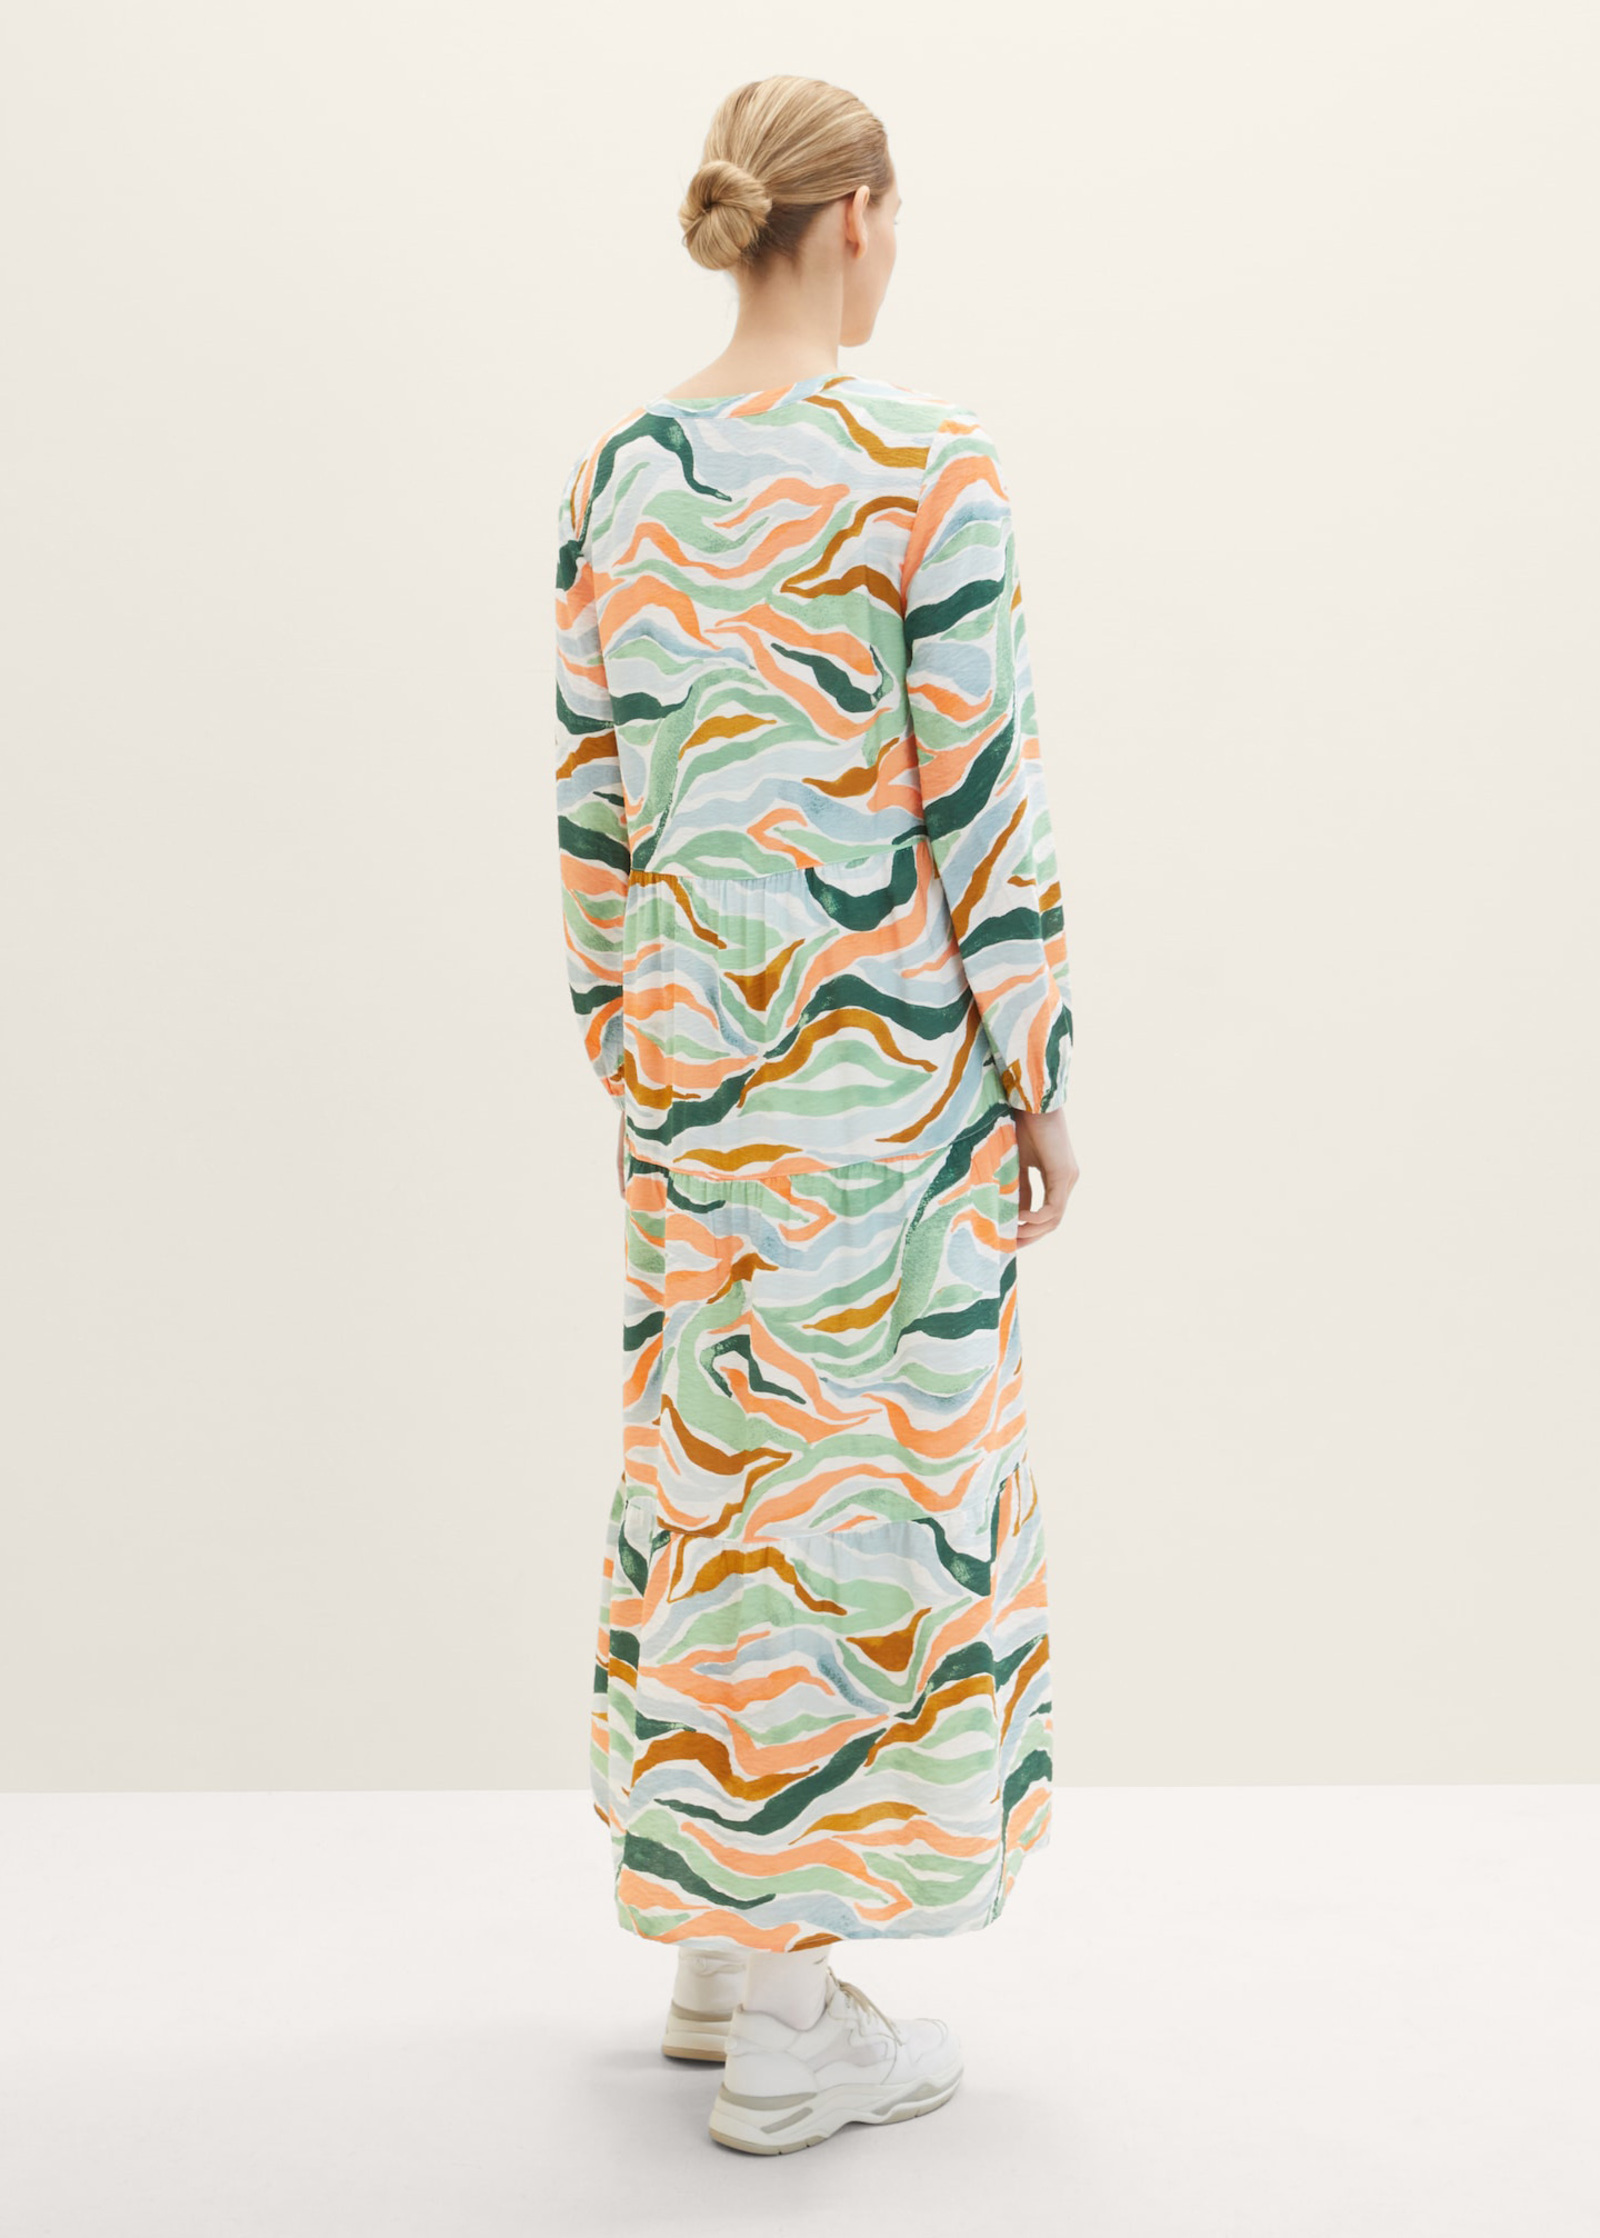 Tom Tailor® Dress Wavy Design Size 38 - Colorful